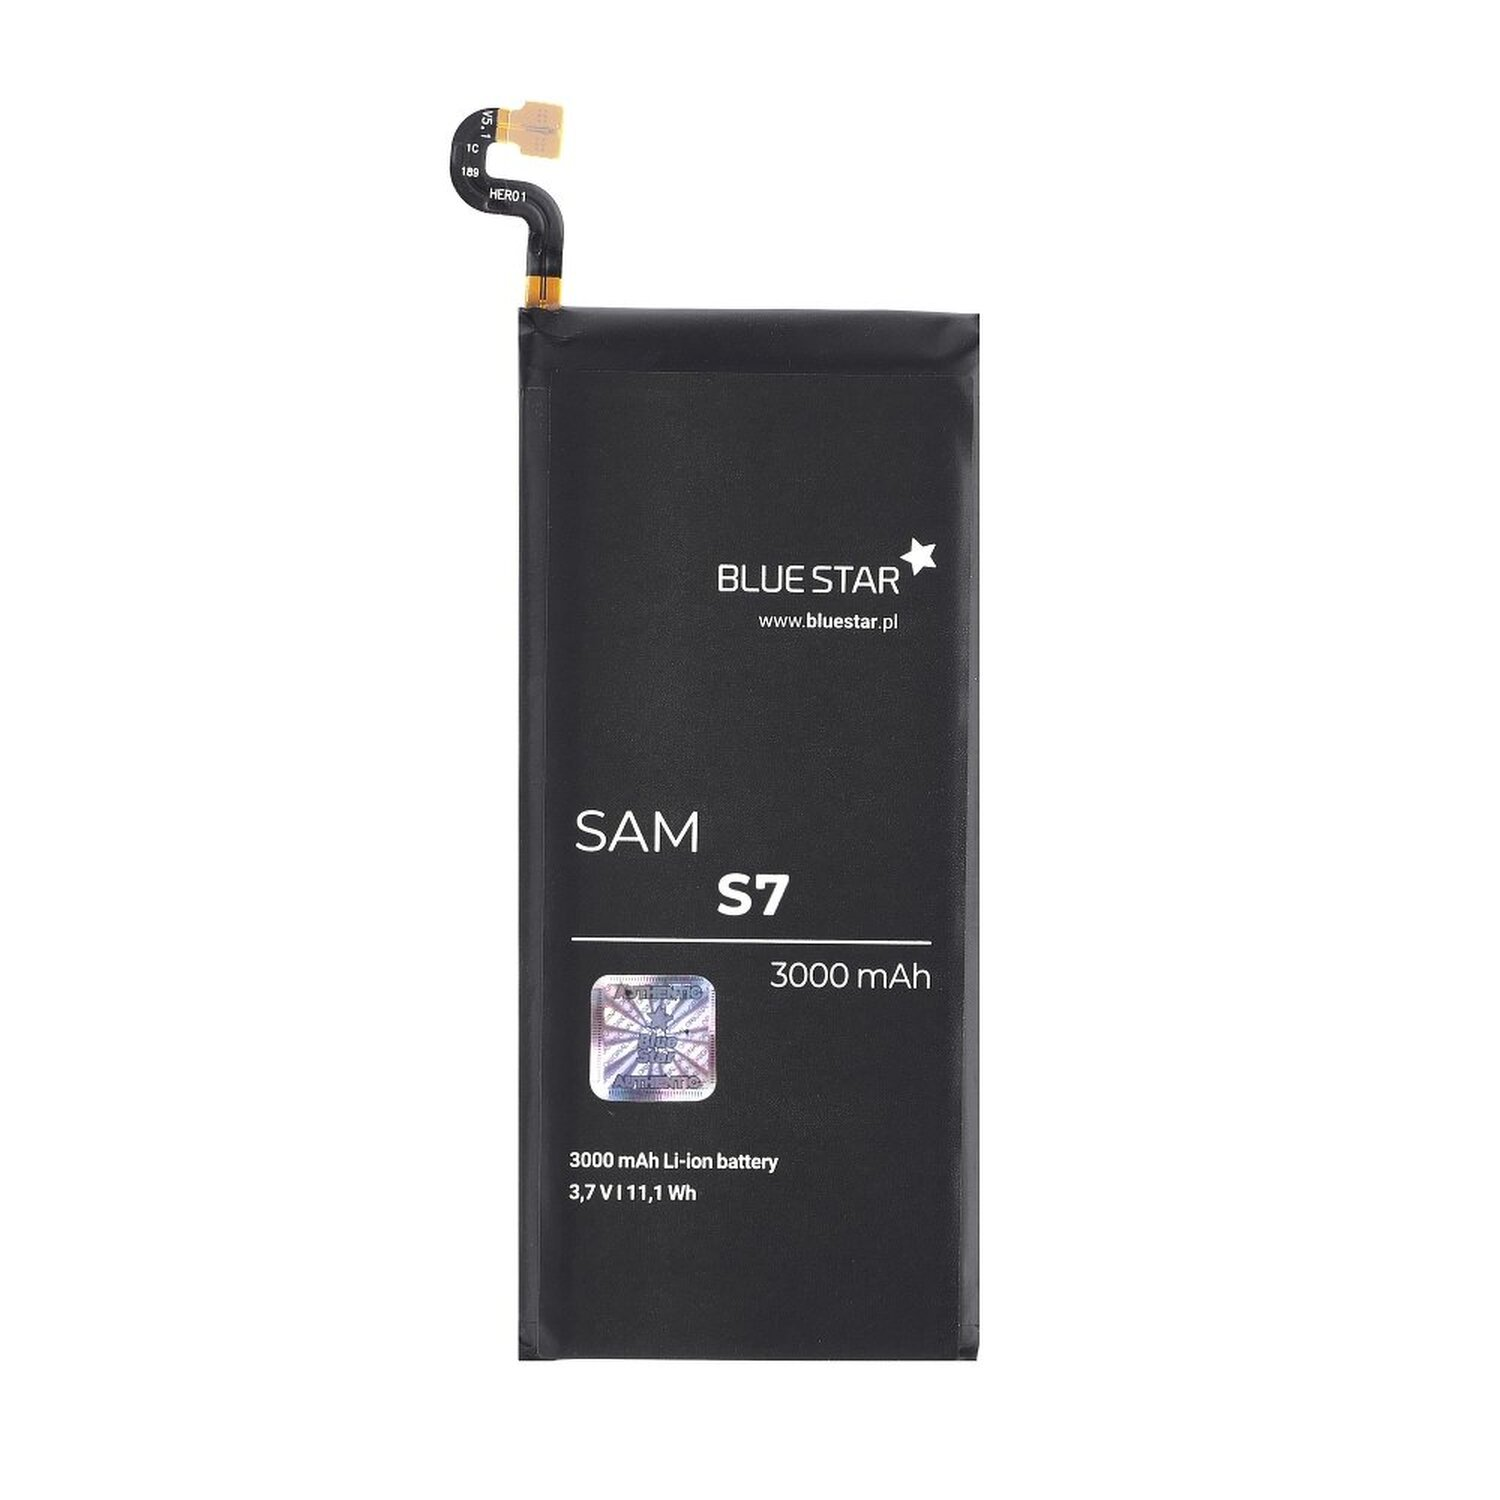 (G930F) Akku Samsung BLUESTAR für Li-Ion Handyakku S7 Galaxy